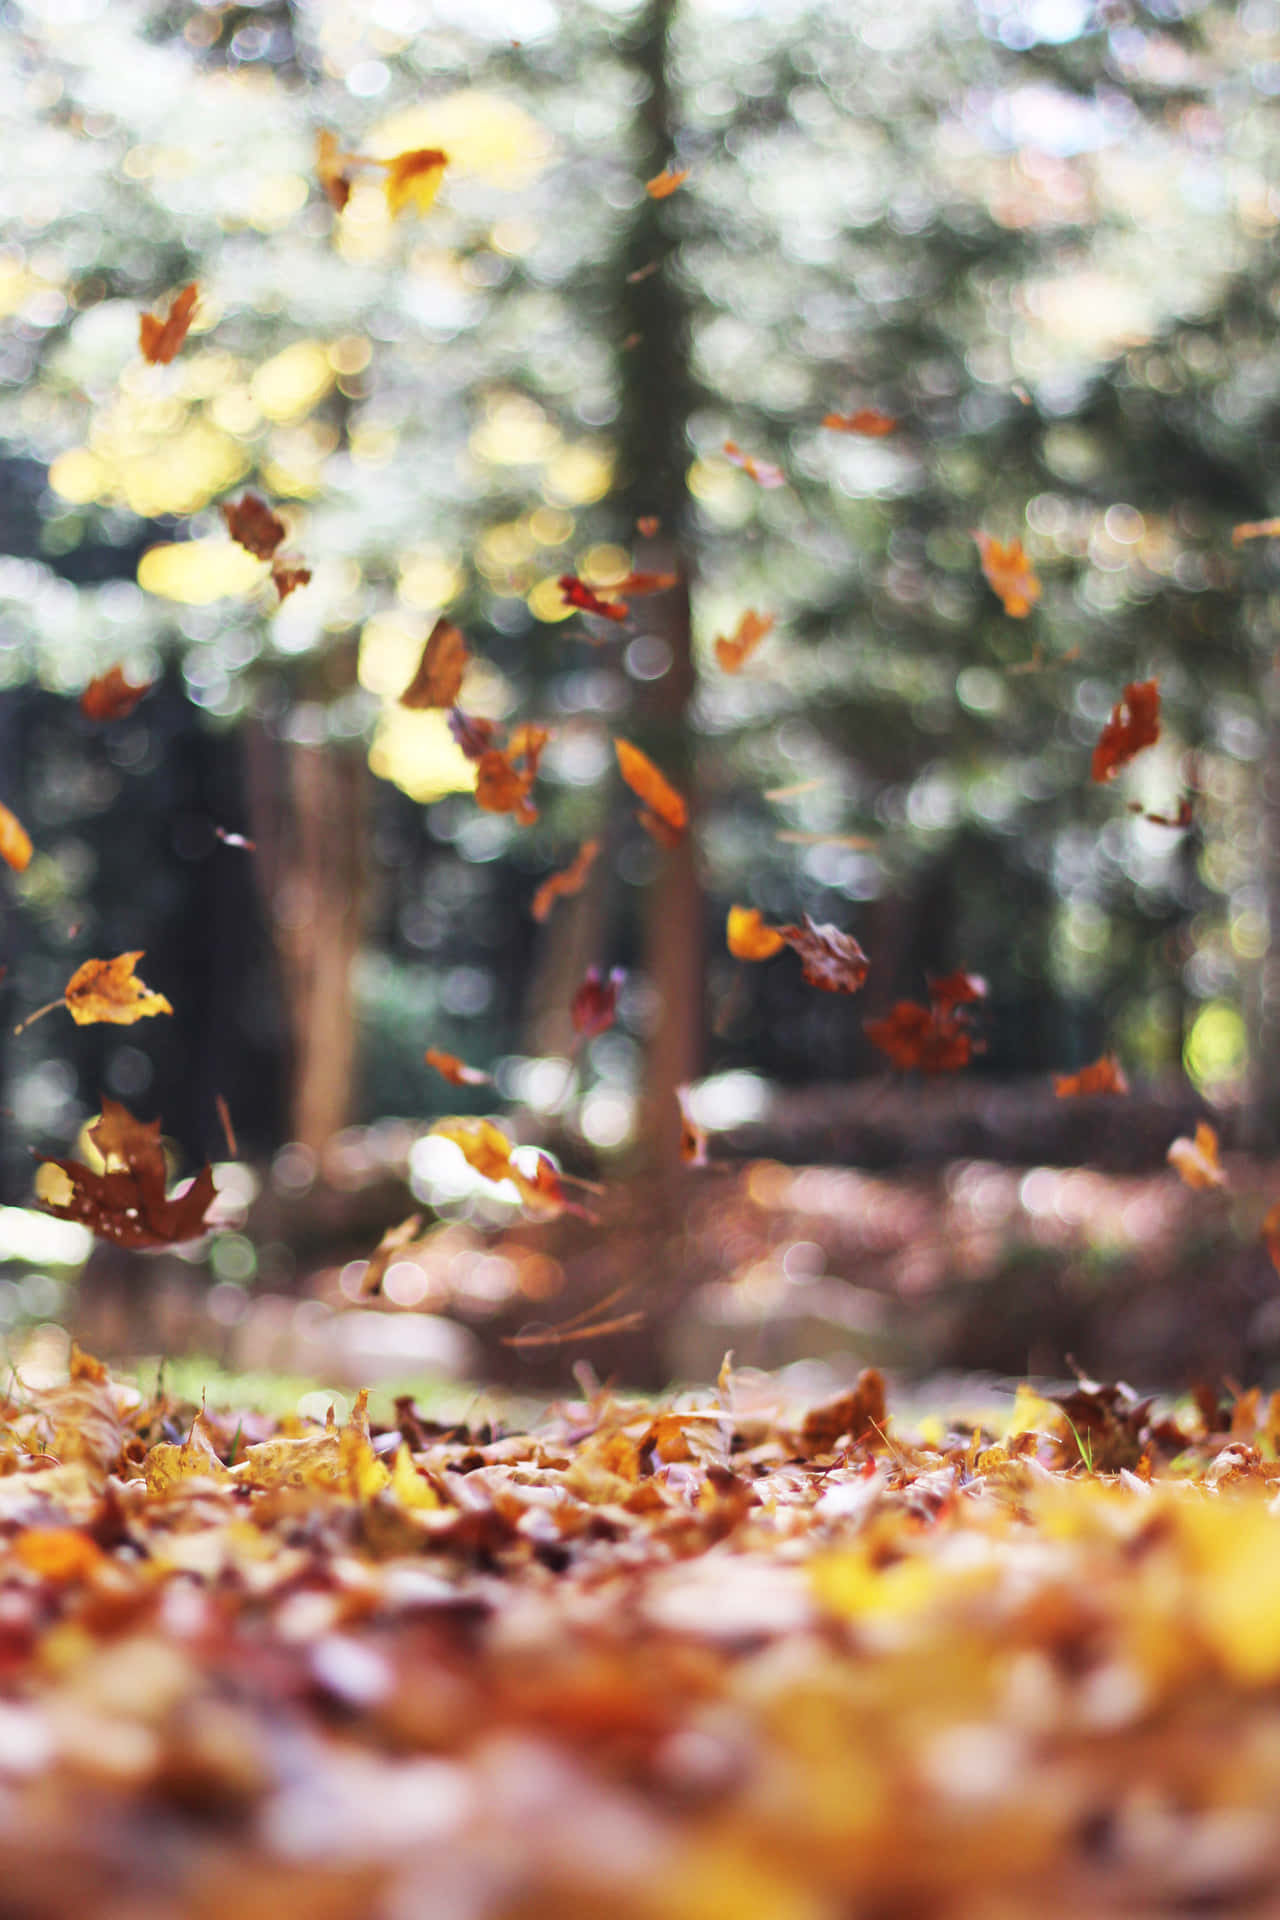 Enjoying the beauty of autumn fall